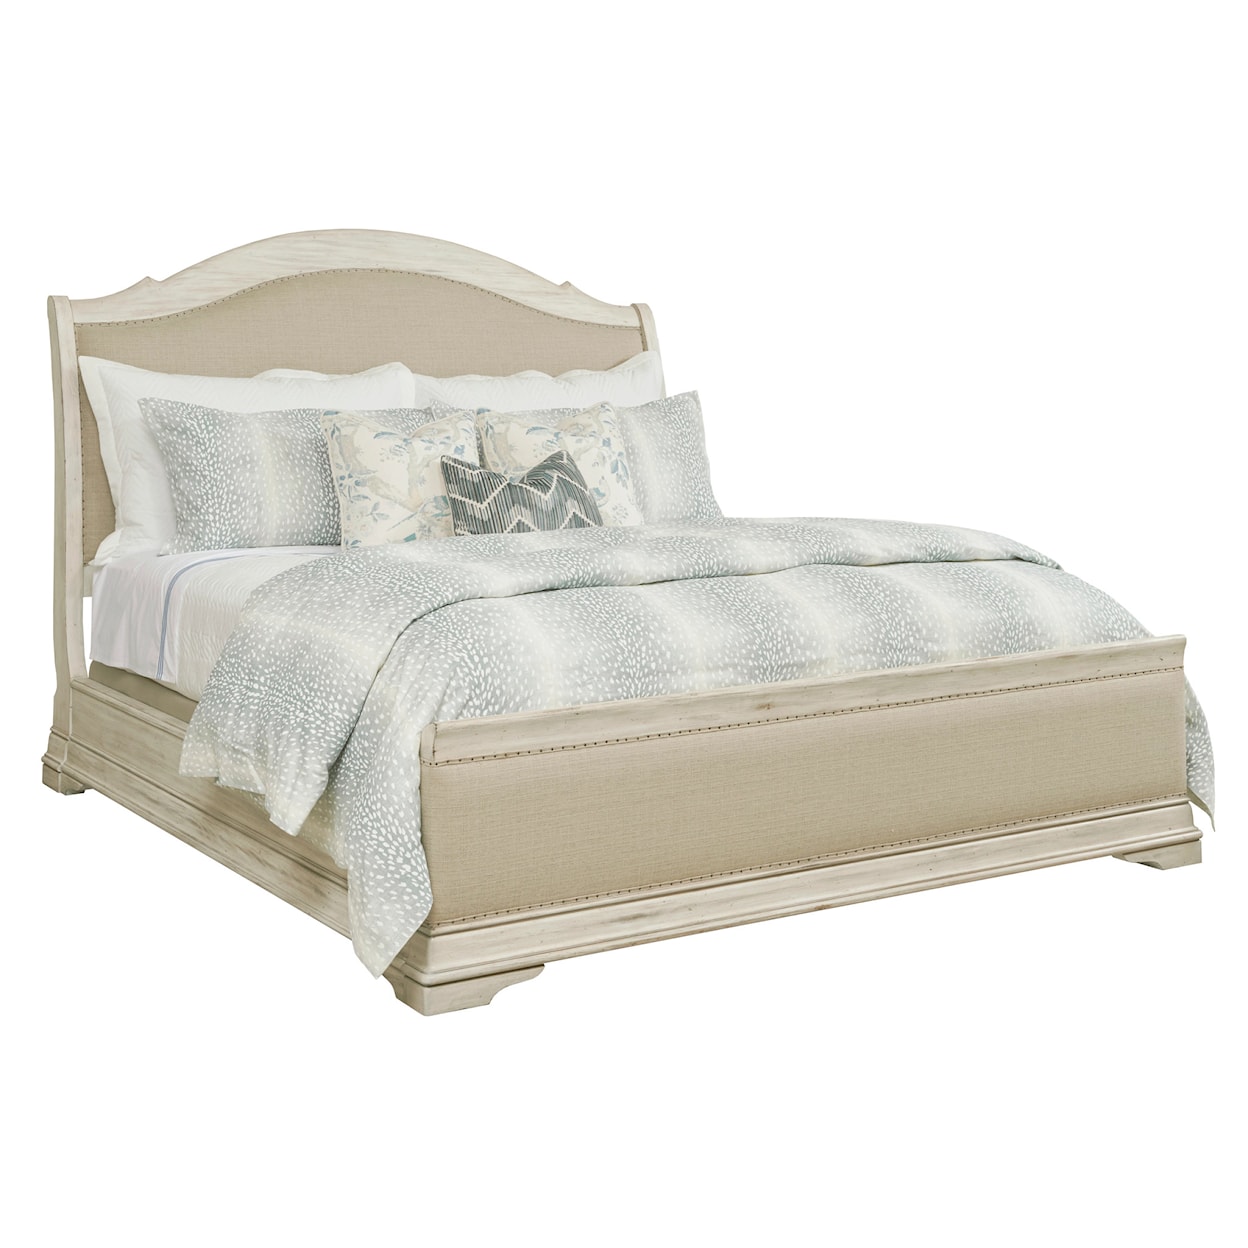 Kincaid Furniture Selwyn California King Sleigh Bed - Complete